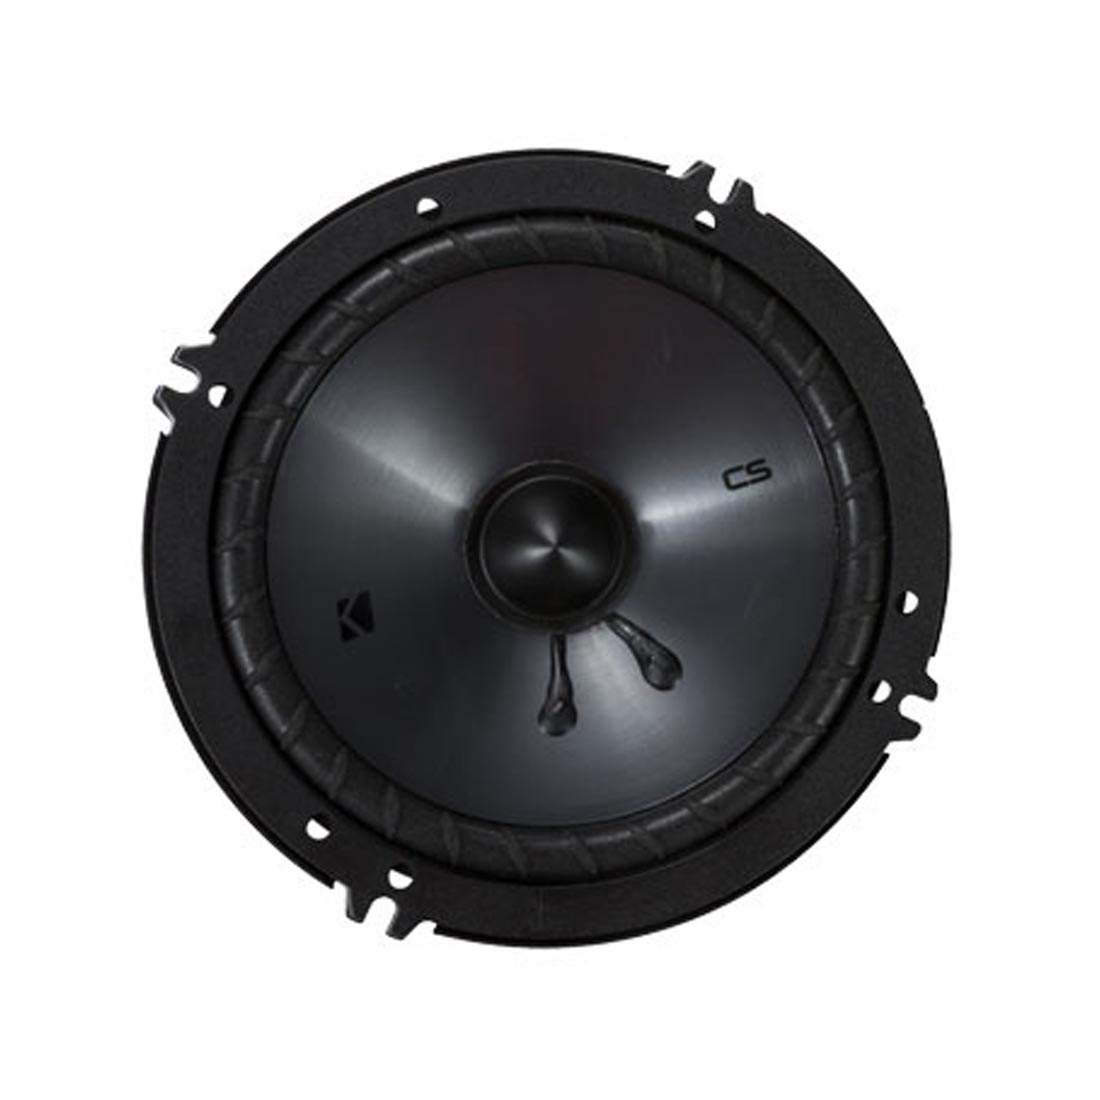 Kicker 46CSS674 CS Series 6.75" Component Speaker System